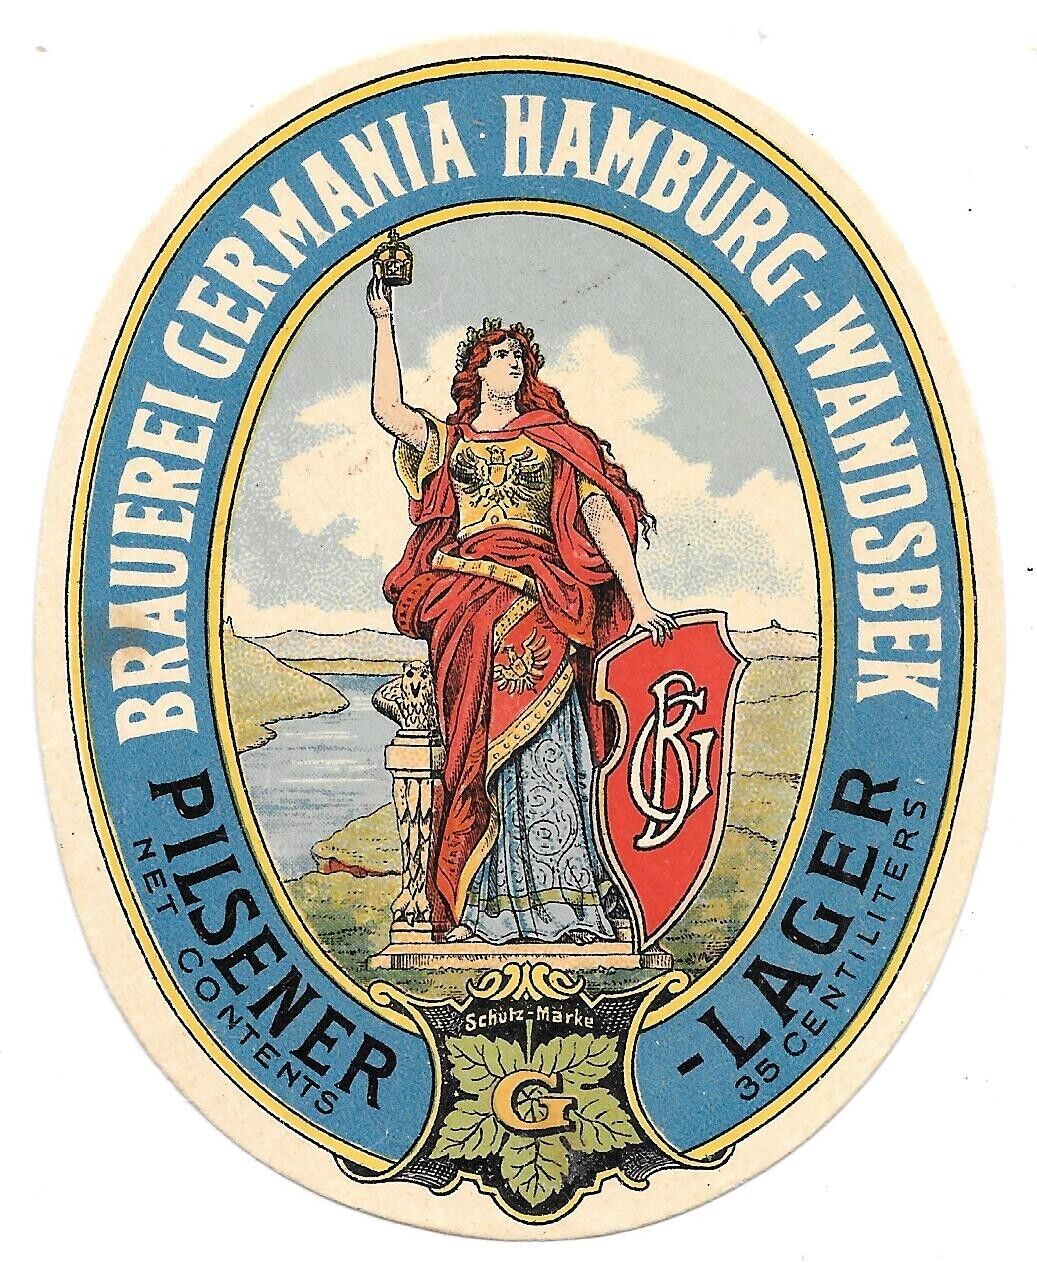 old Beerlabel Germania Brauerei Hamburg Germany from 1910